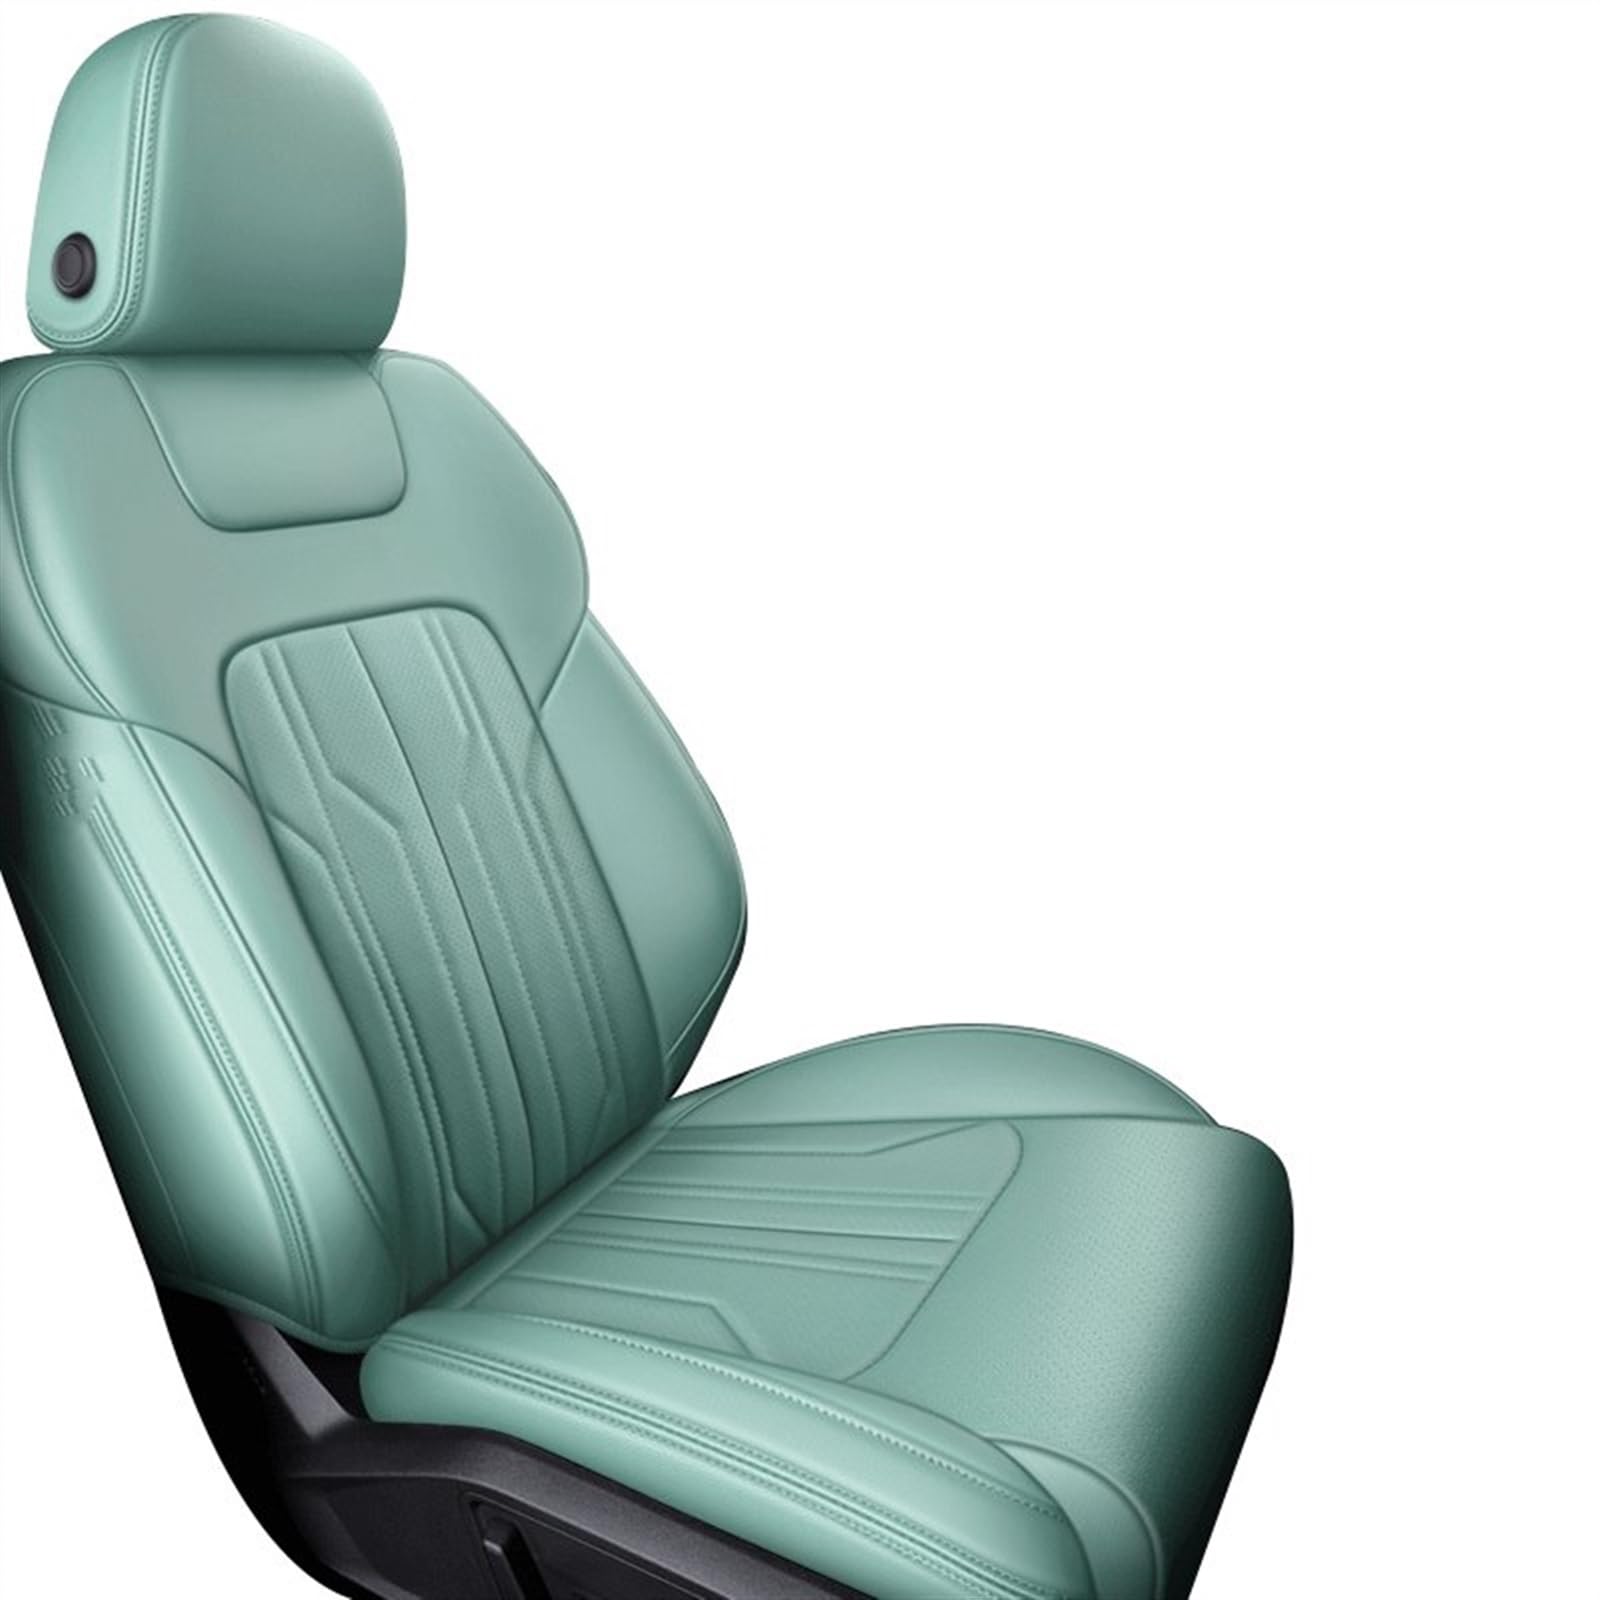 TATARENGS Automobilinnenraum Kompatibel Mit Infiniti Qx80 Qx70 Fx Ex Jx Qx50 Q70 Qx60 Q50 Qx30 Q30 Q60 Auto-Innensitzbezug-Schutz, Vier Jahreszeiten-Sitzbezug(A-1pcs,color1) von TATARENGS